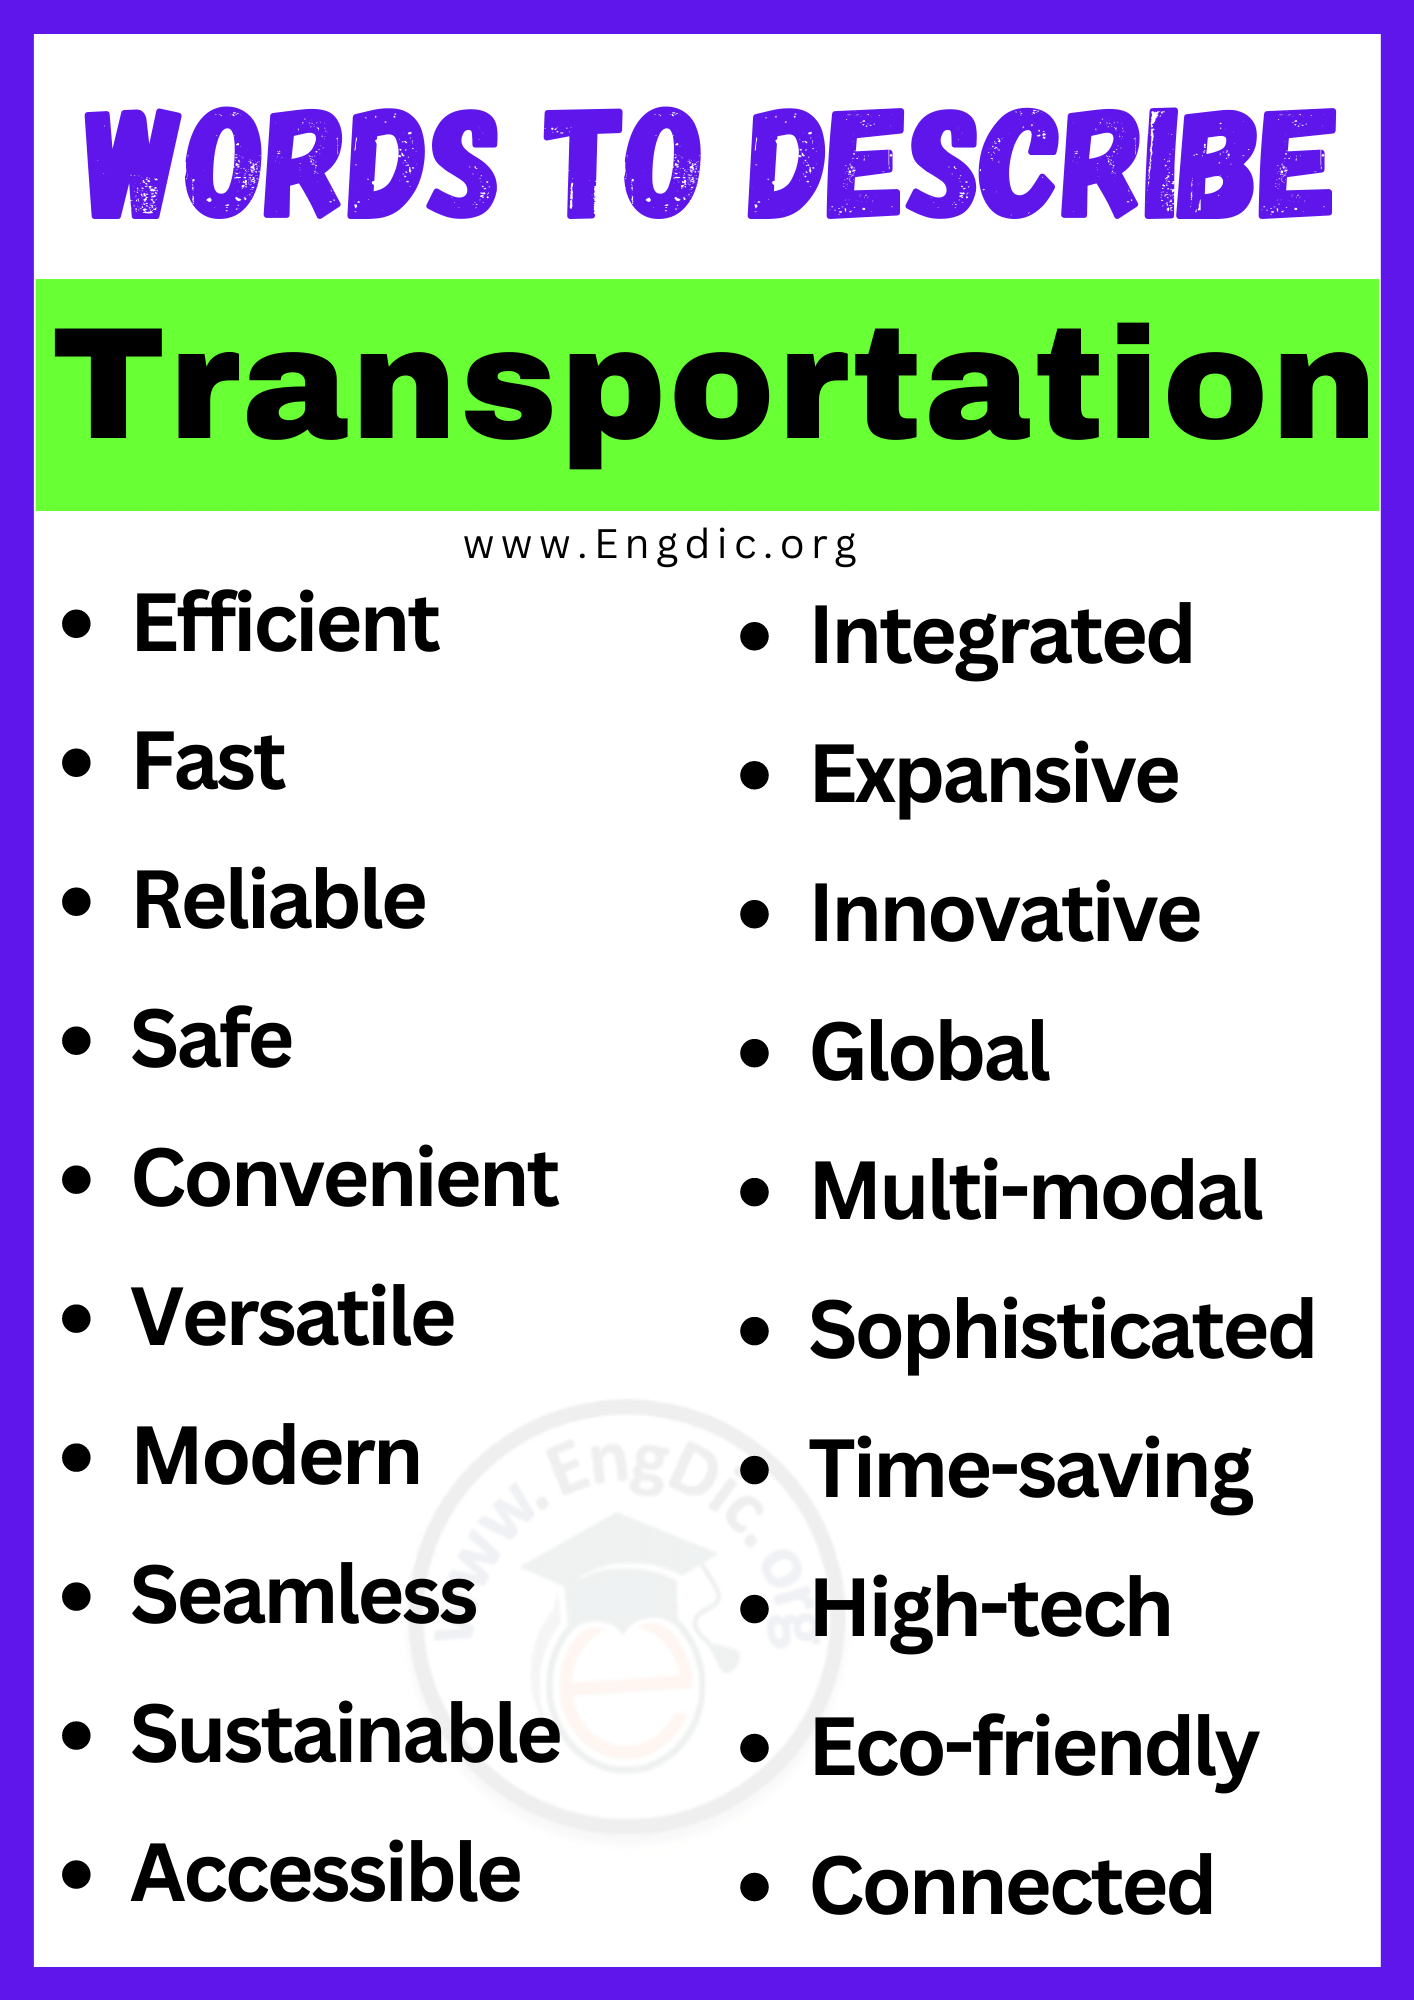 Words to Describe Transportation